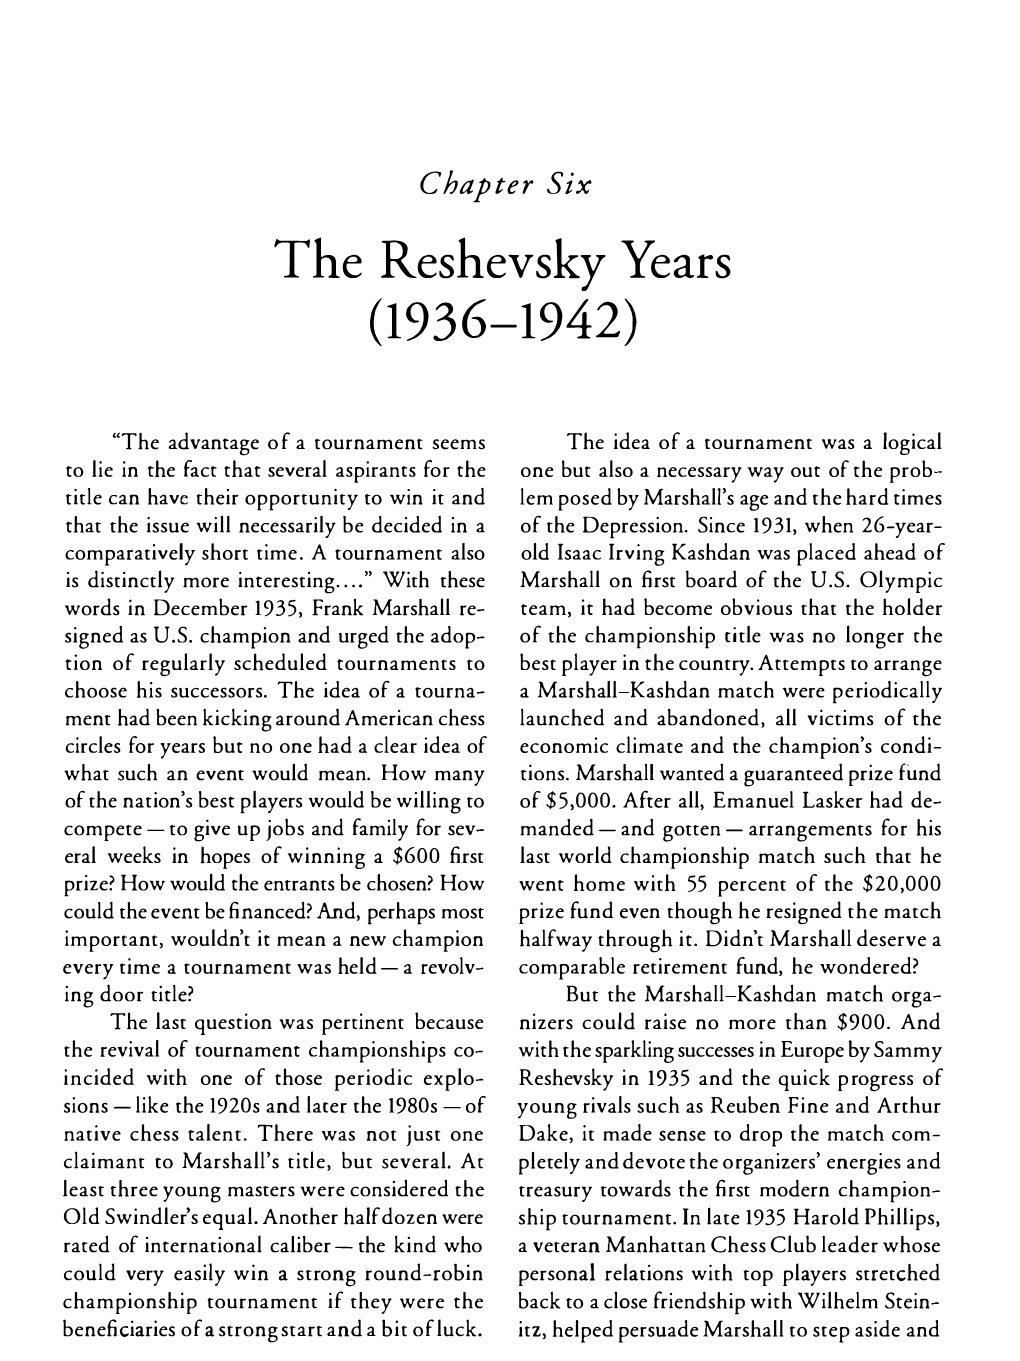 The Reshevsky Years (1936-1942) 47